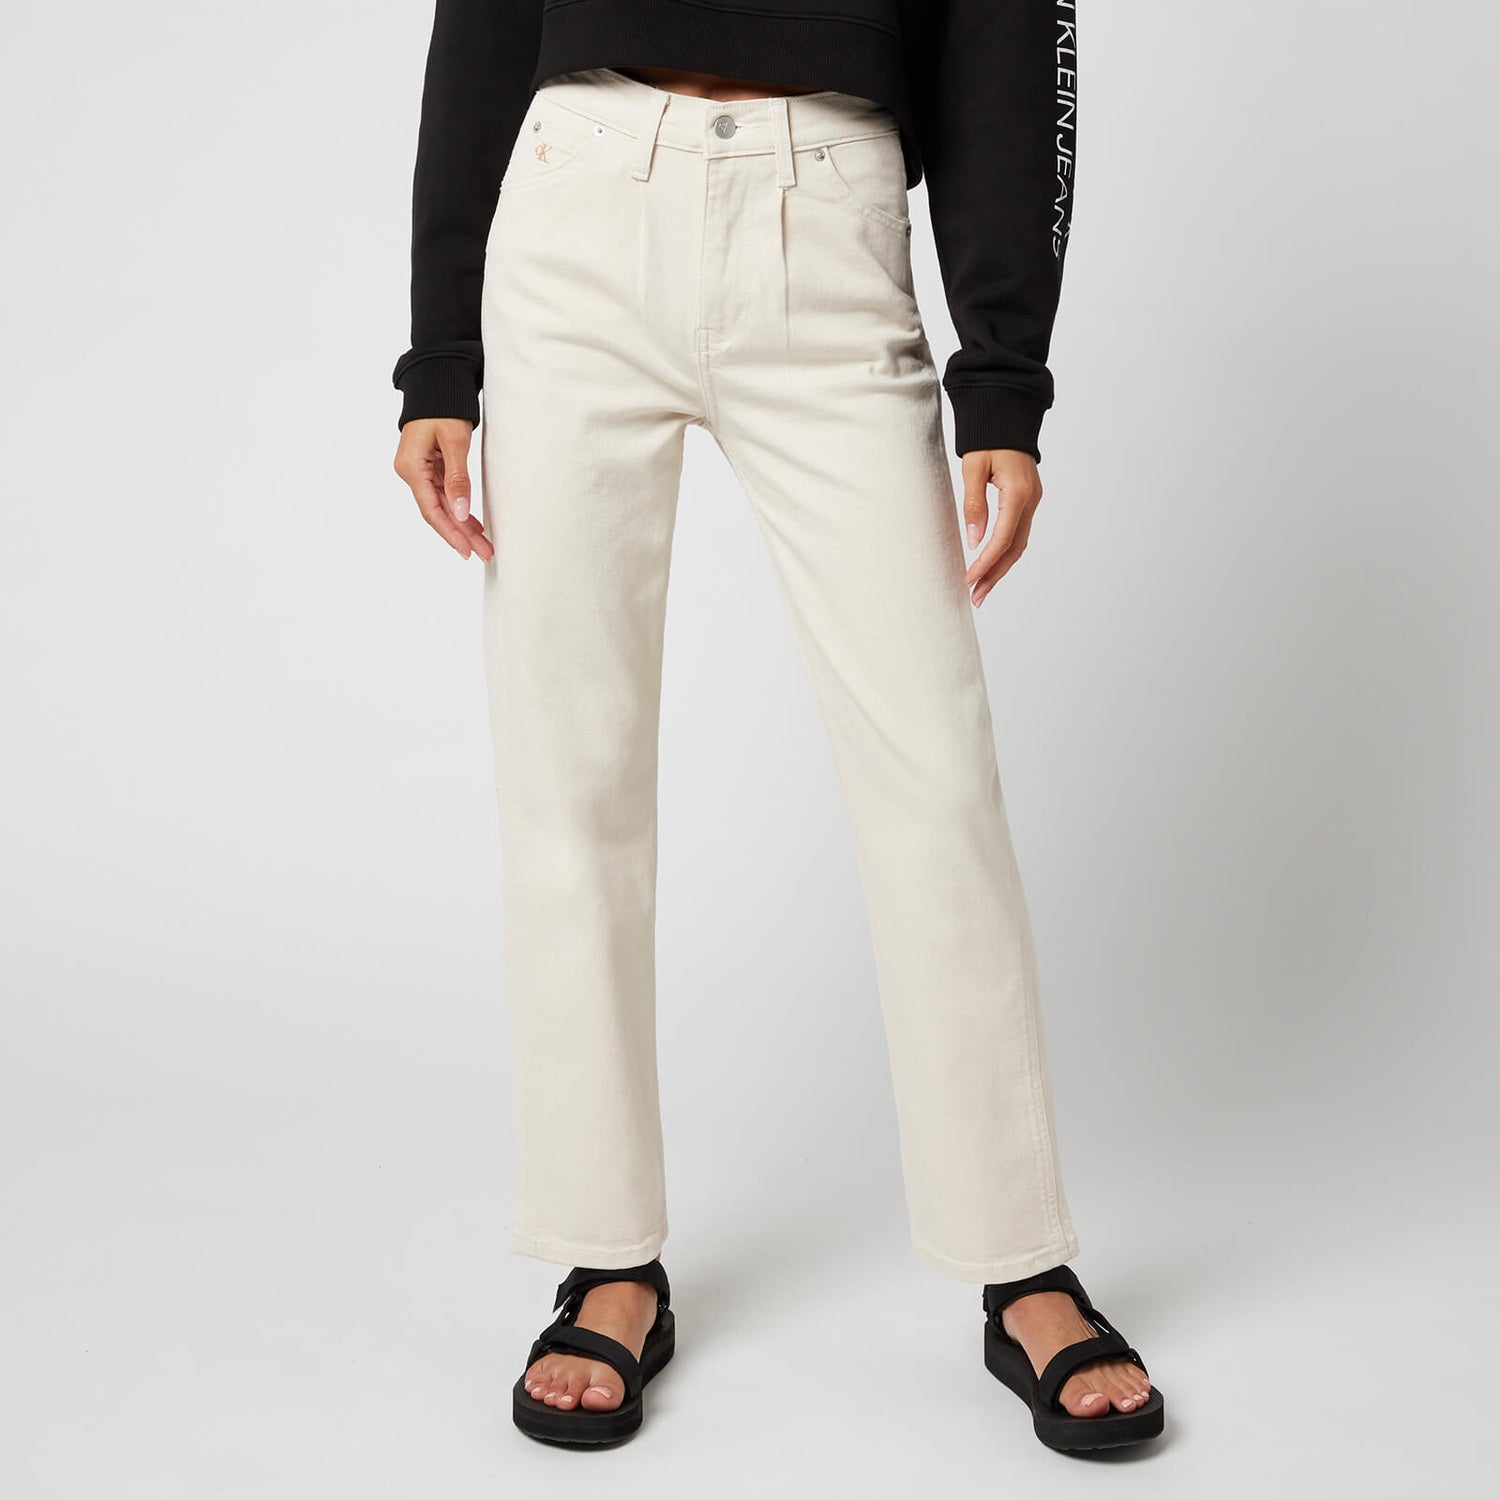 Calvin Klein Jeans Women's High Rise Straight Ankle Jeans - Denim Light